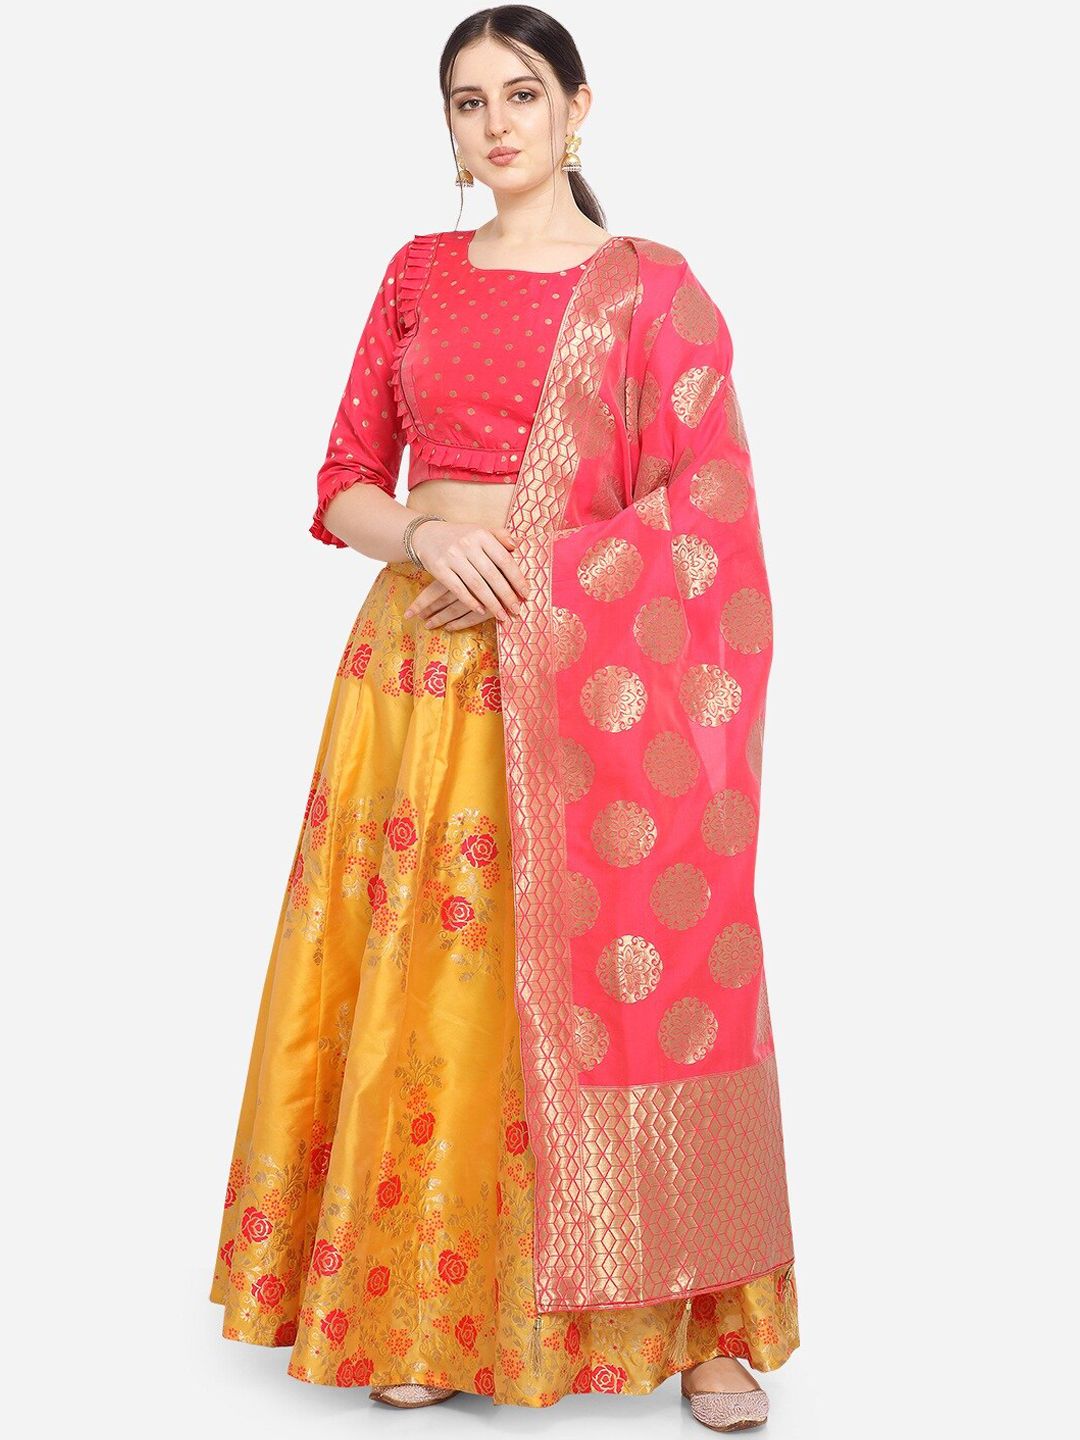 PURVAJA Women Yellow & Orange Printed Semi-Stitched Lehenga & Unstitched Blouse with Dupatta Price in India